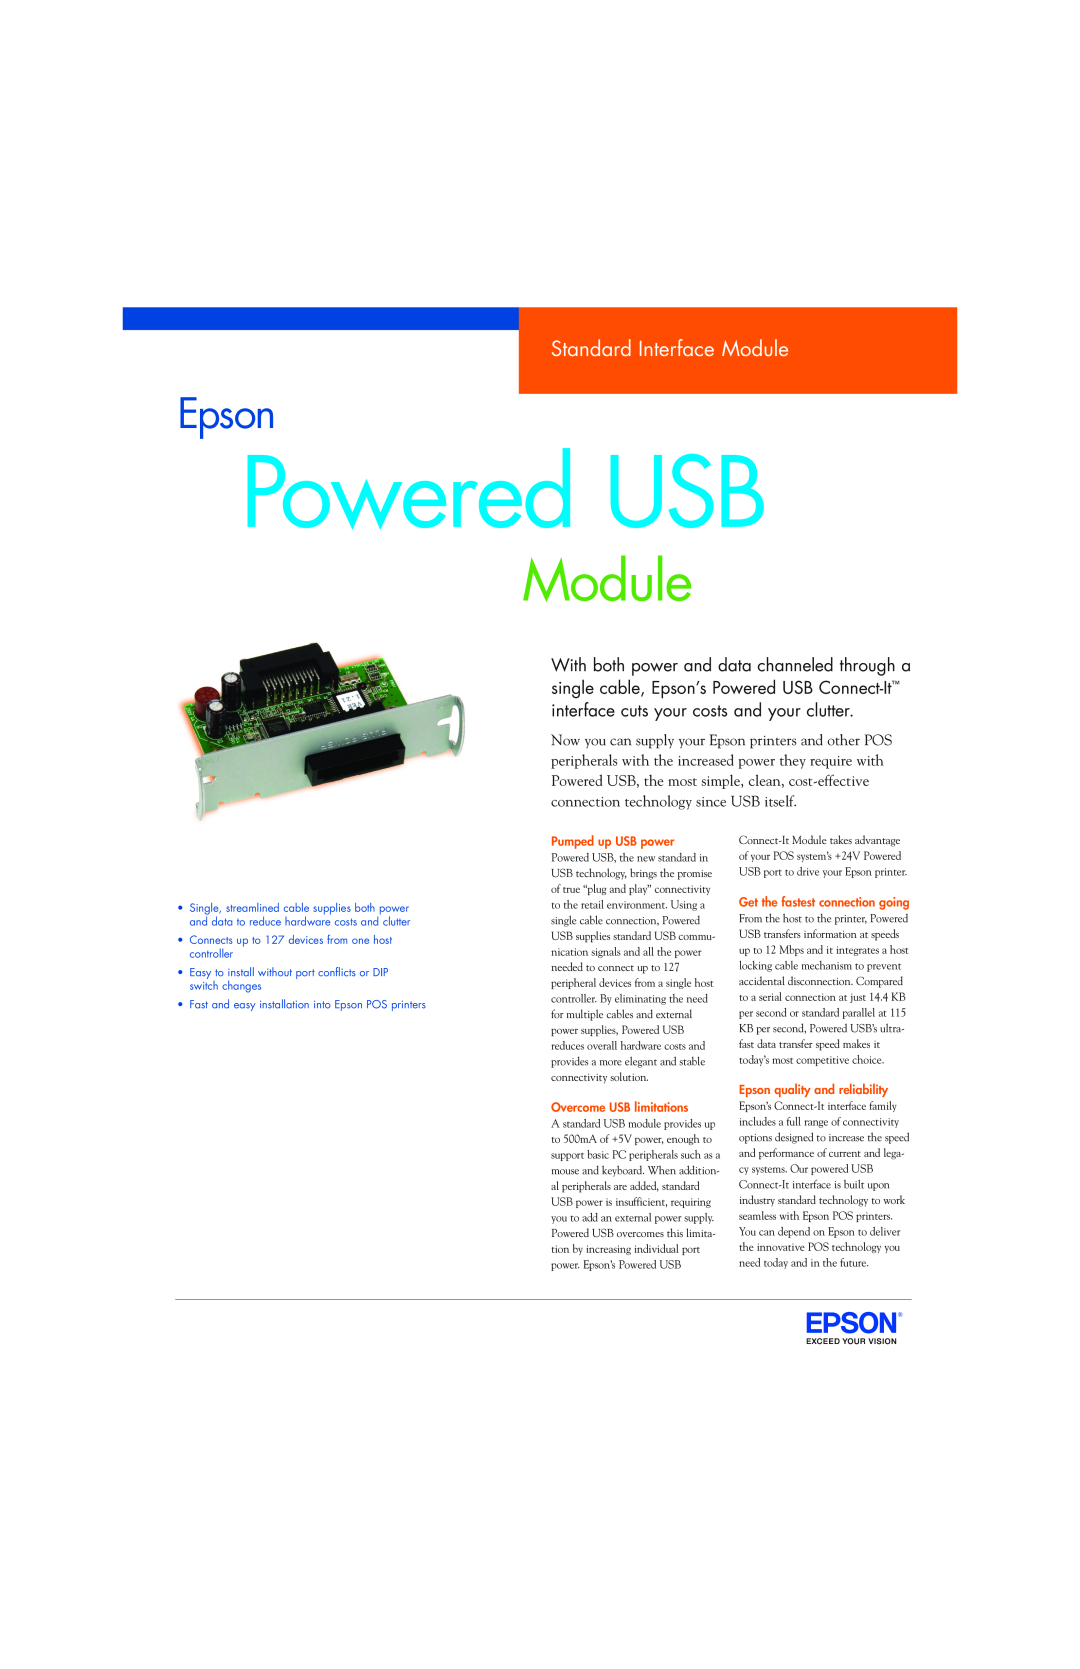 Epson SD-DSPUSBB manual Powered USB, Epson, Standard Interface Module, Pumped up USB power, Overcome USB limitations 